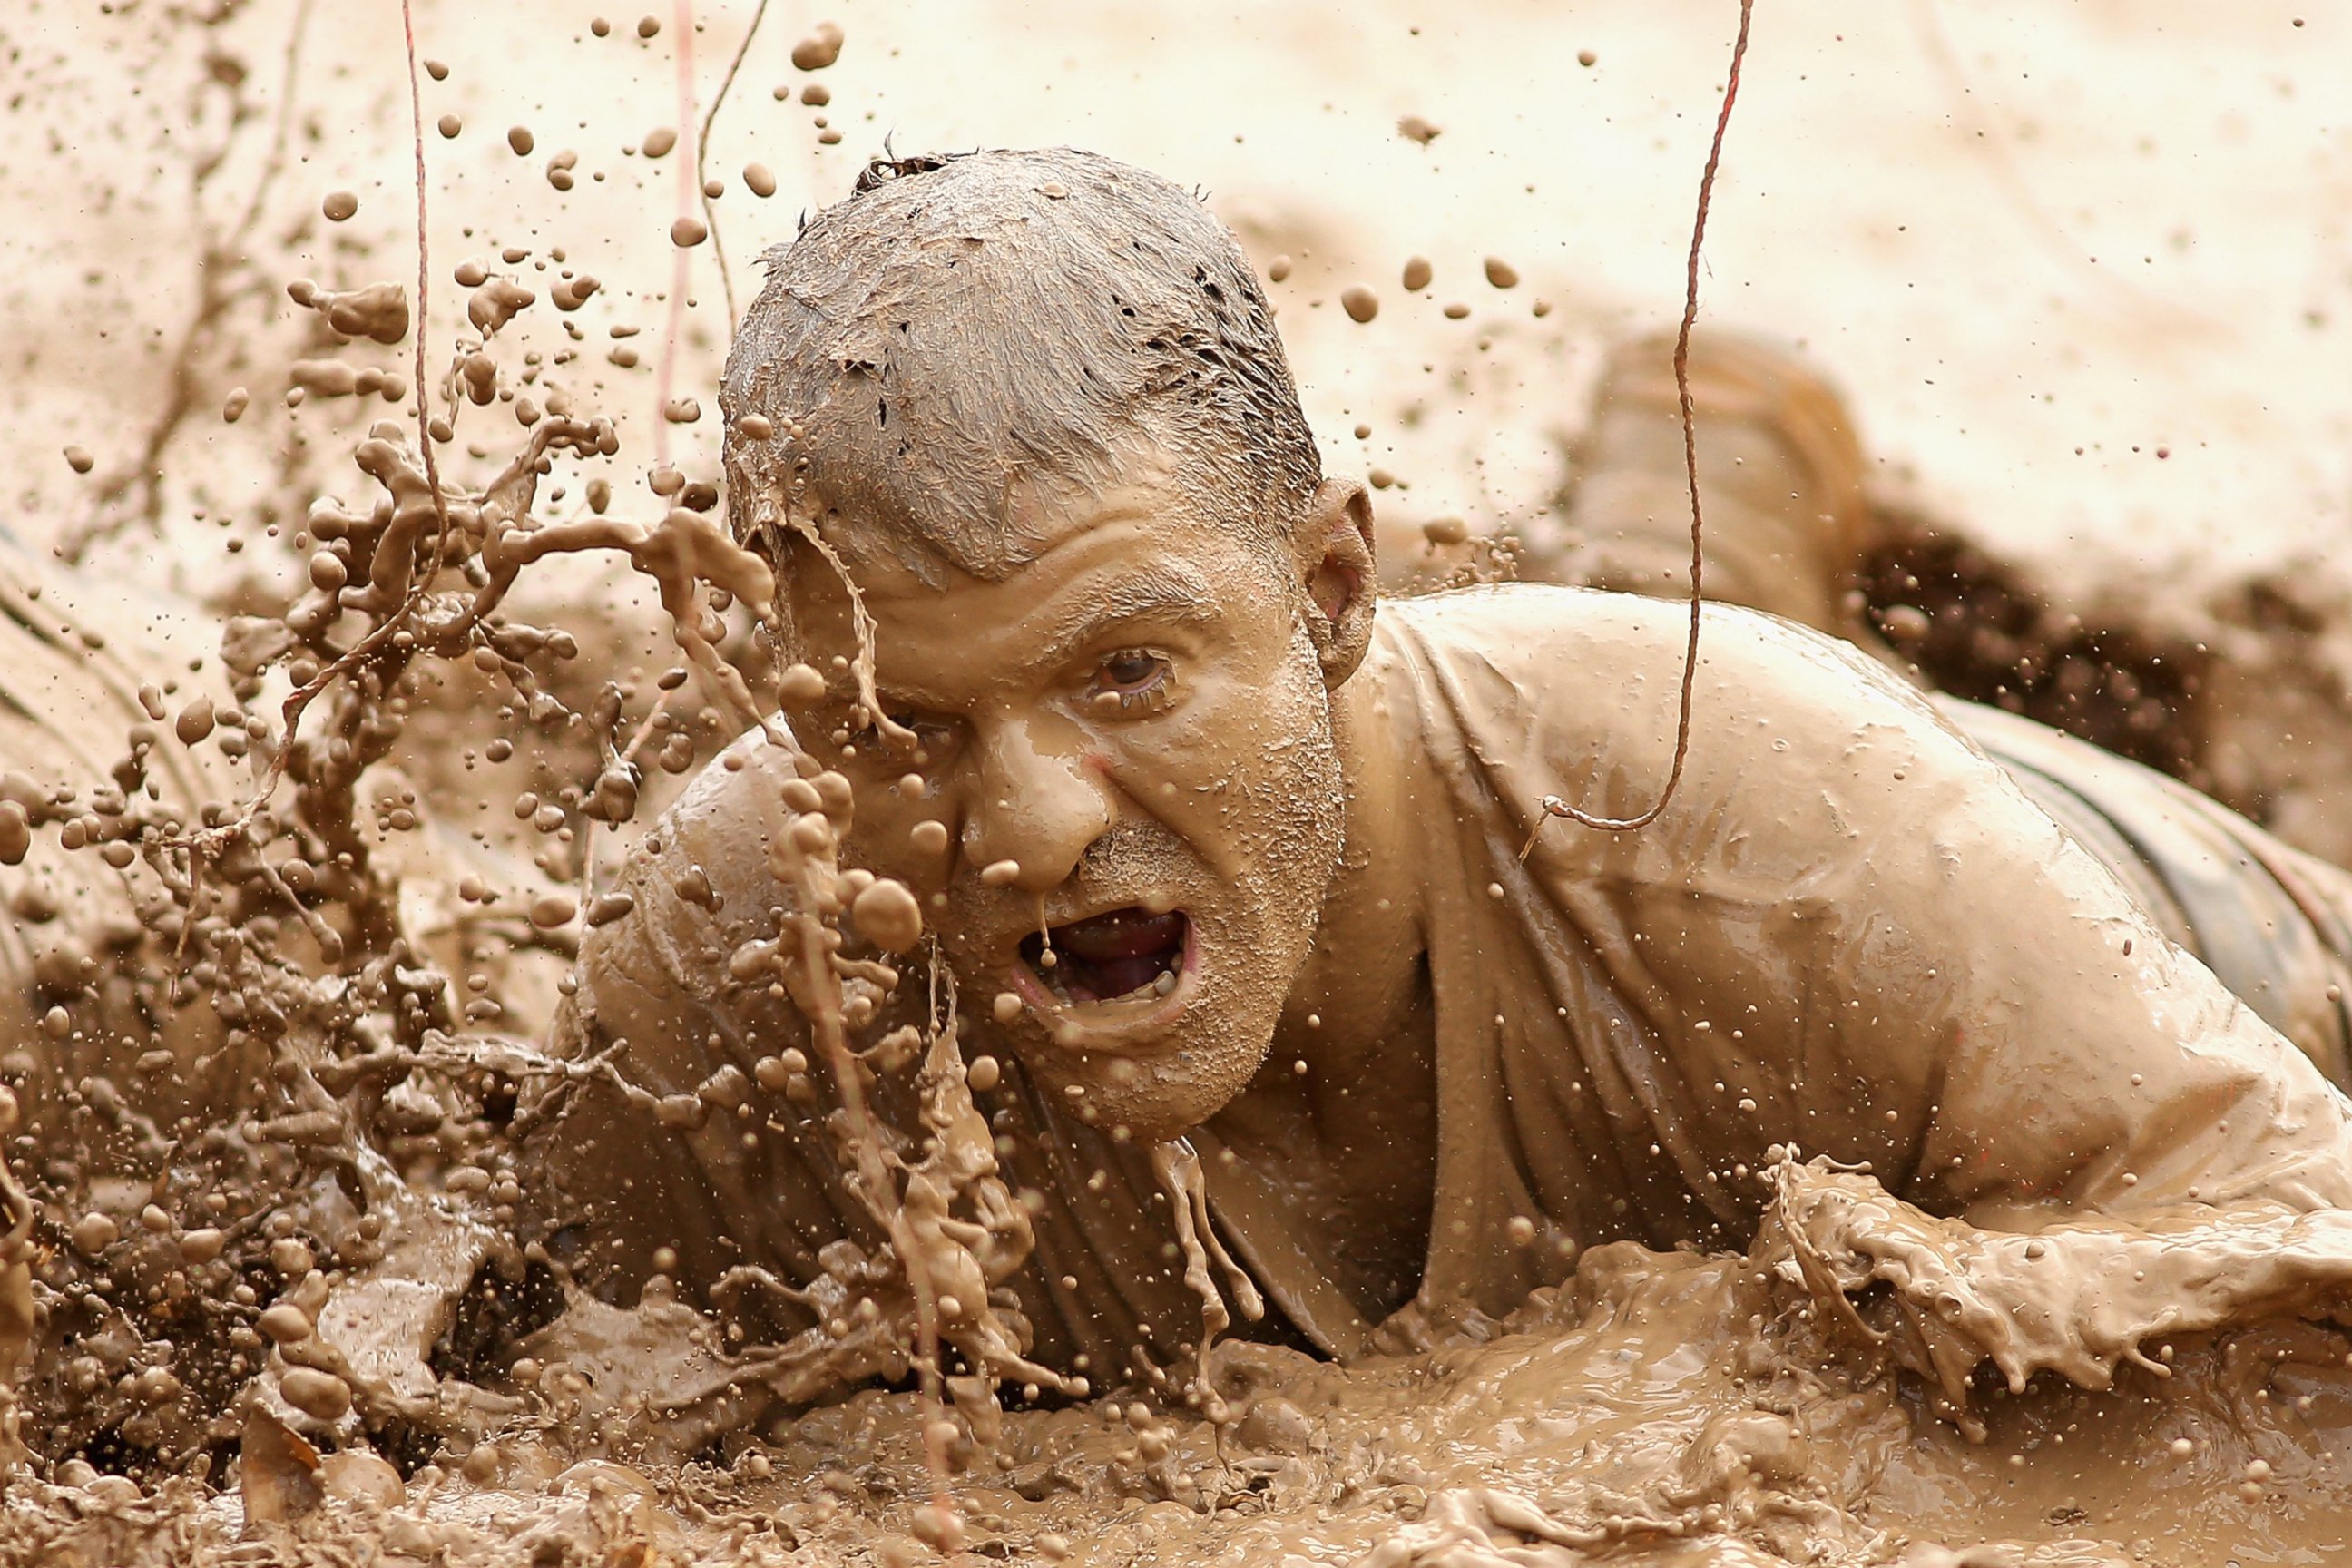 PHOTO: A competitor crawls through mud during Toughmudder at Phillip Island Grand Prix Circuit, March 23, 2014 in Phillip Island, Australia.